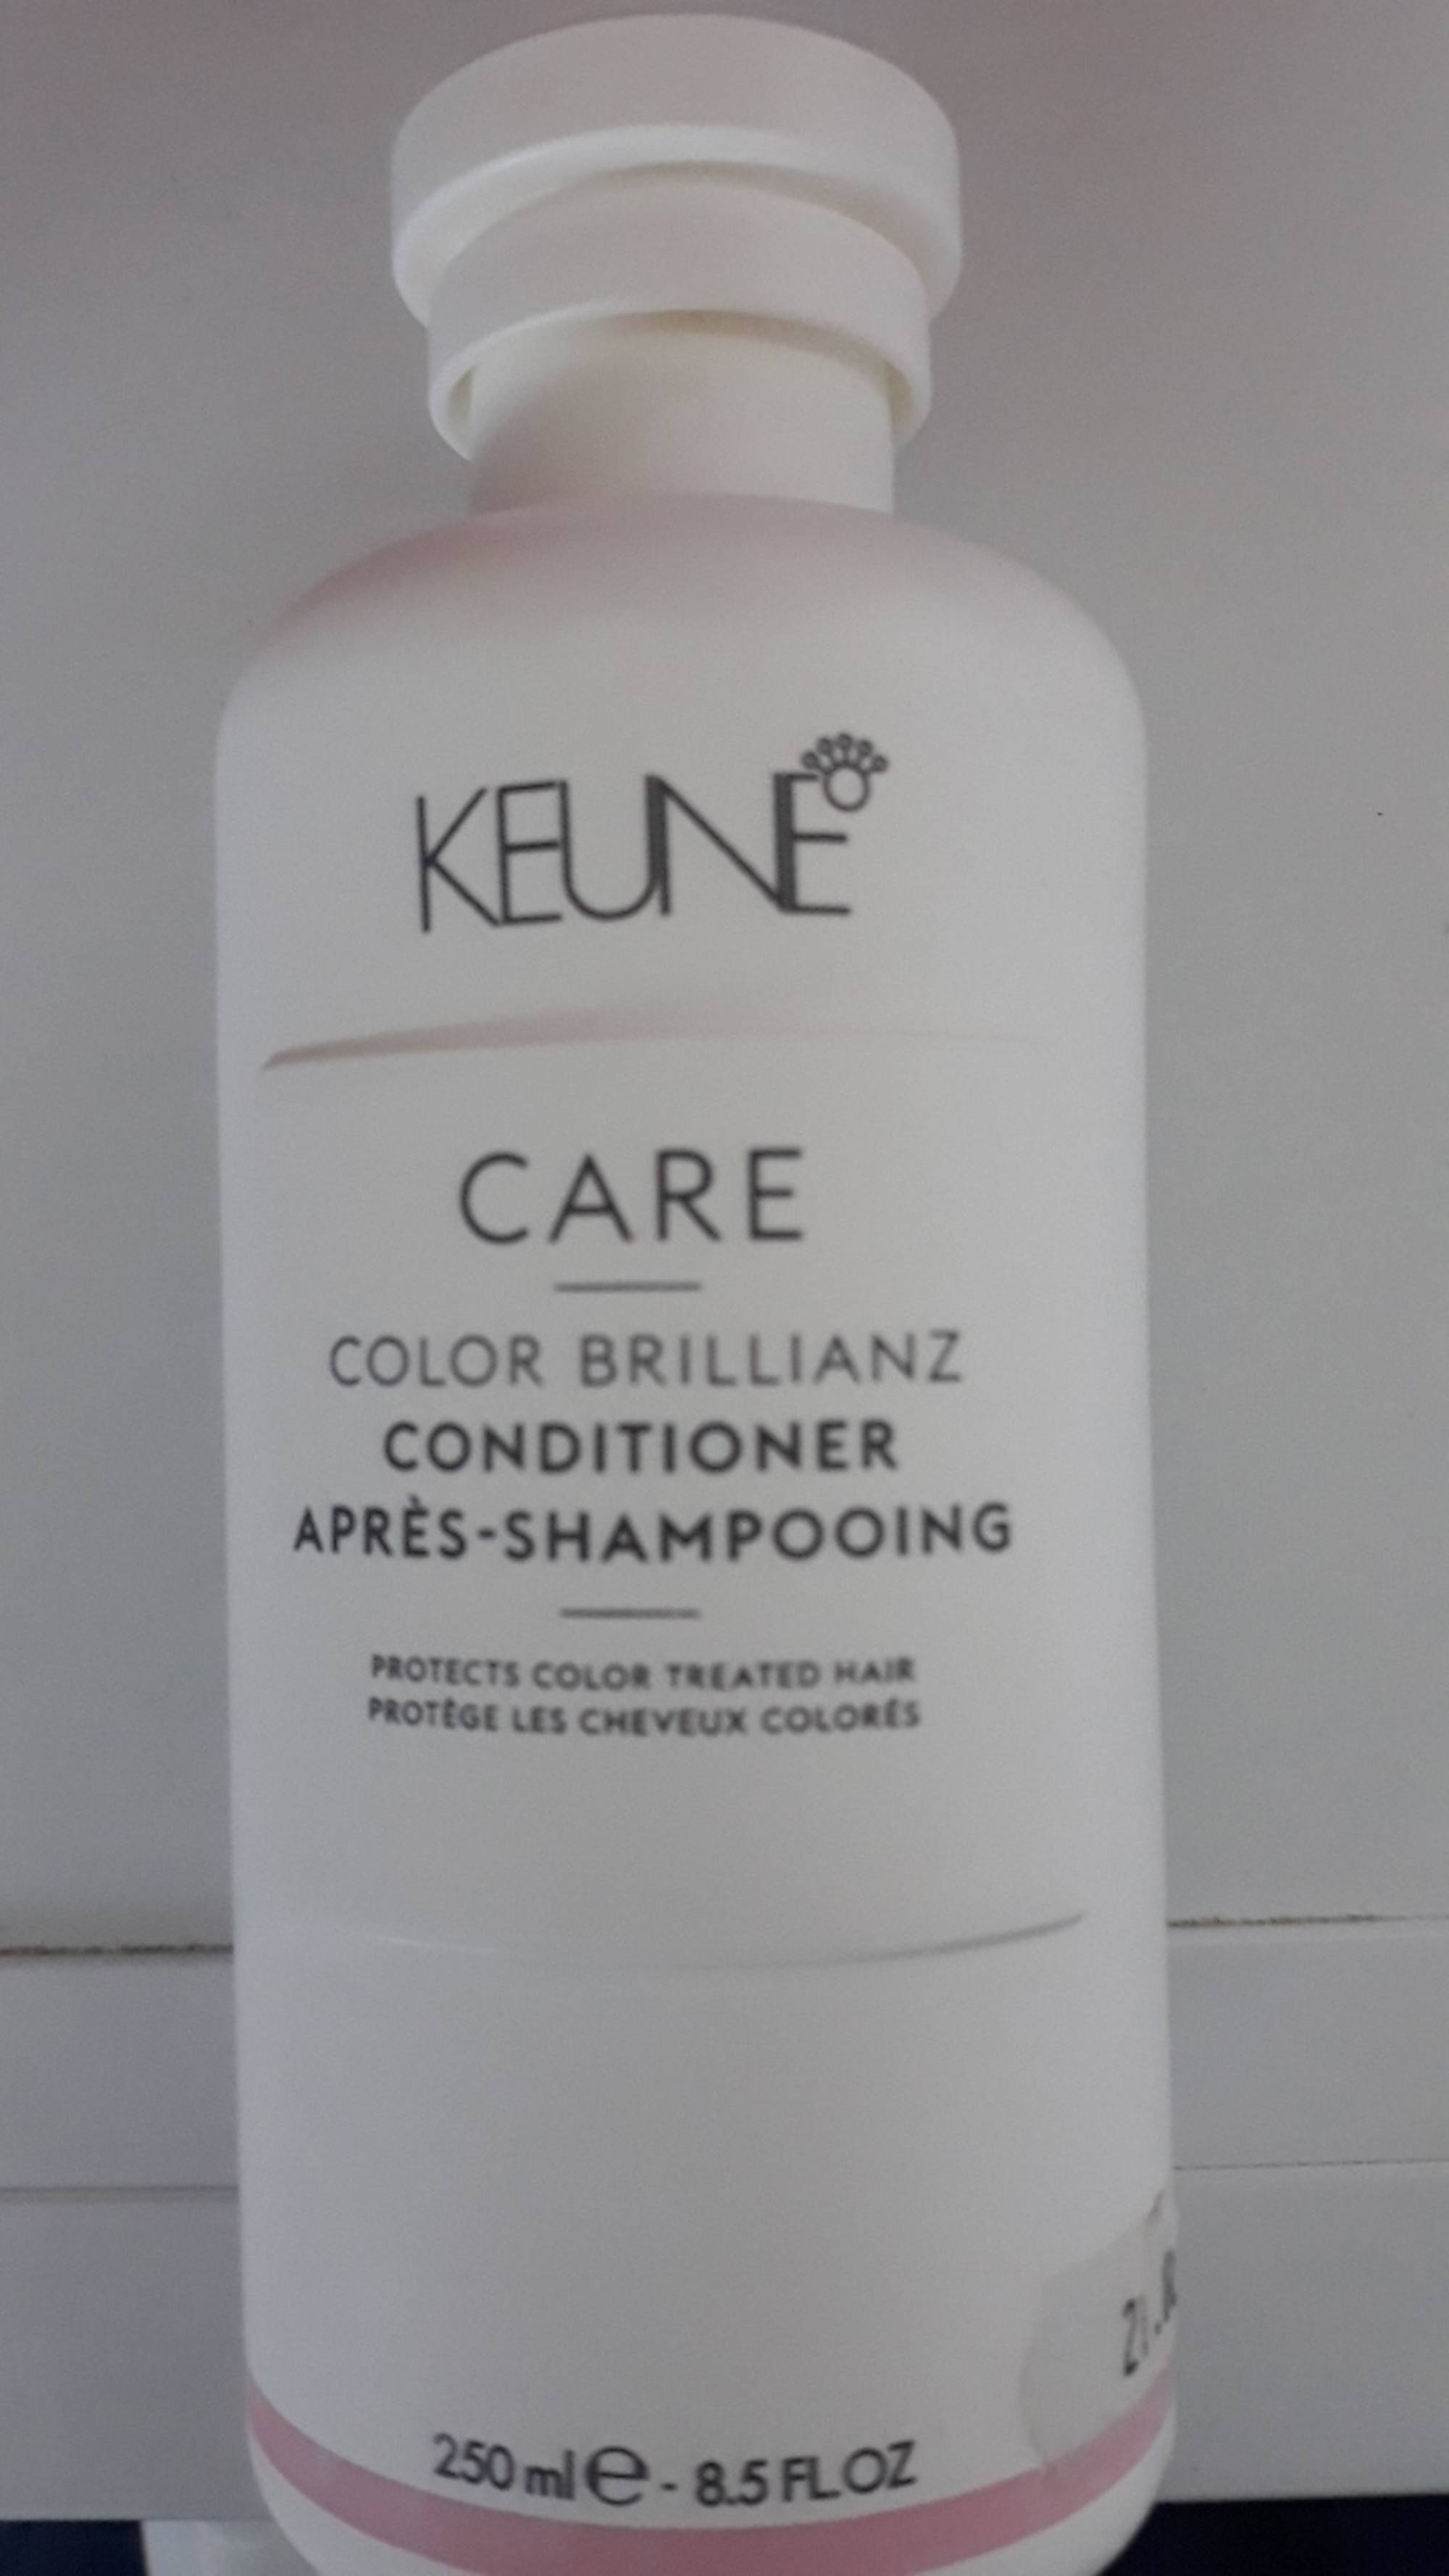 KEUNE - Care Color brillianz - Après-shampooing